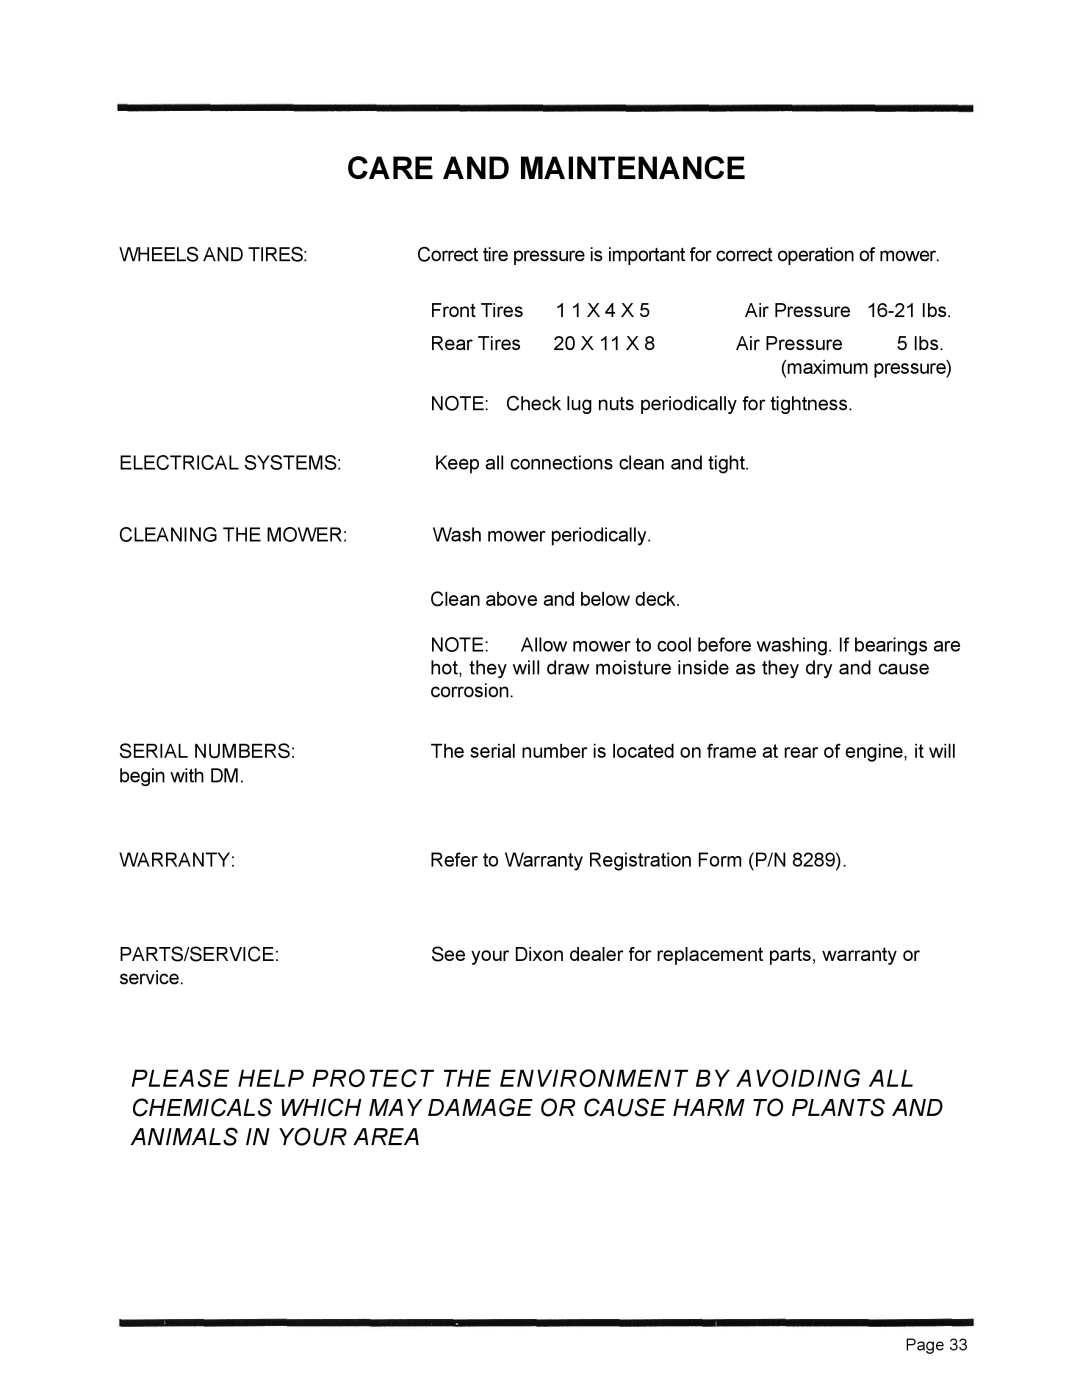 Dixon 6601 Series manual Care And Maintenance 